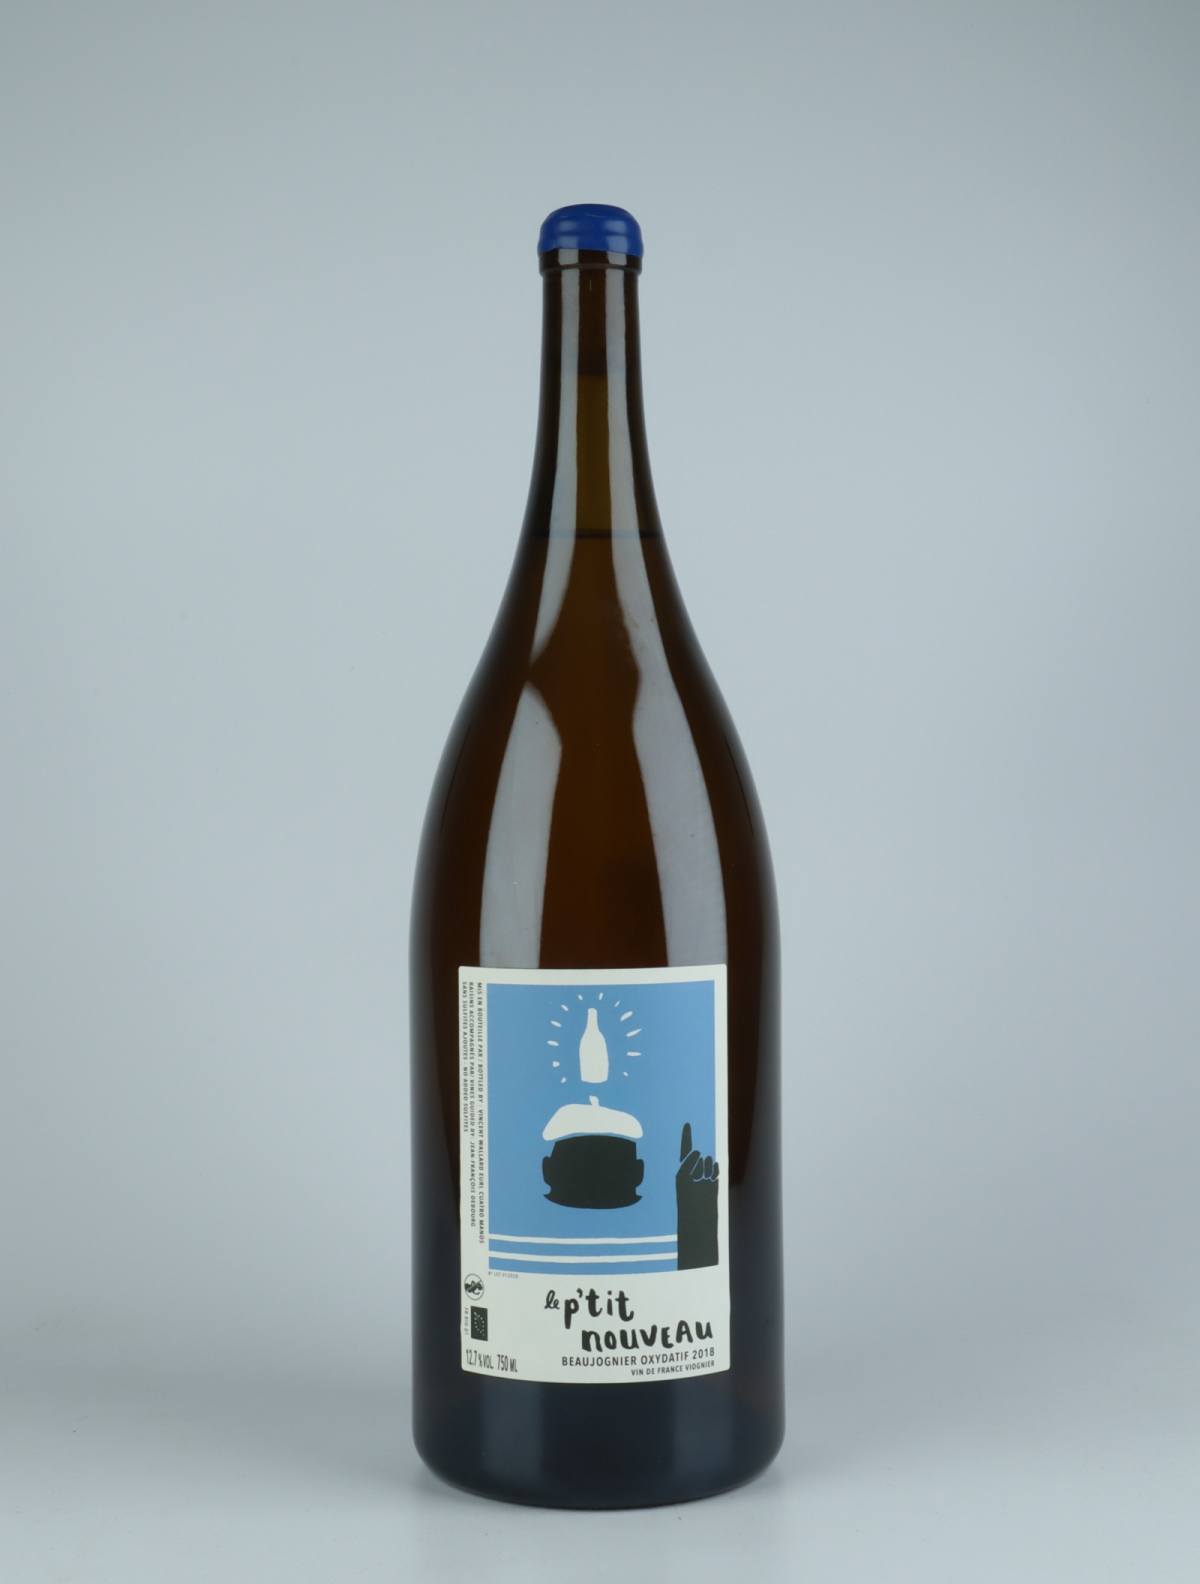 A bottle 2018 Le Beaujognier Blanc White wine from Vincent Wallard, Loire in France